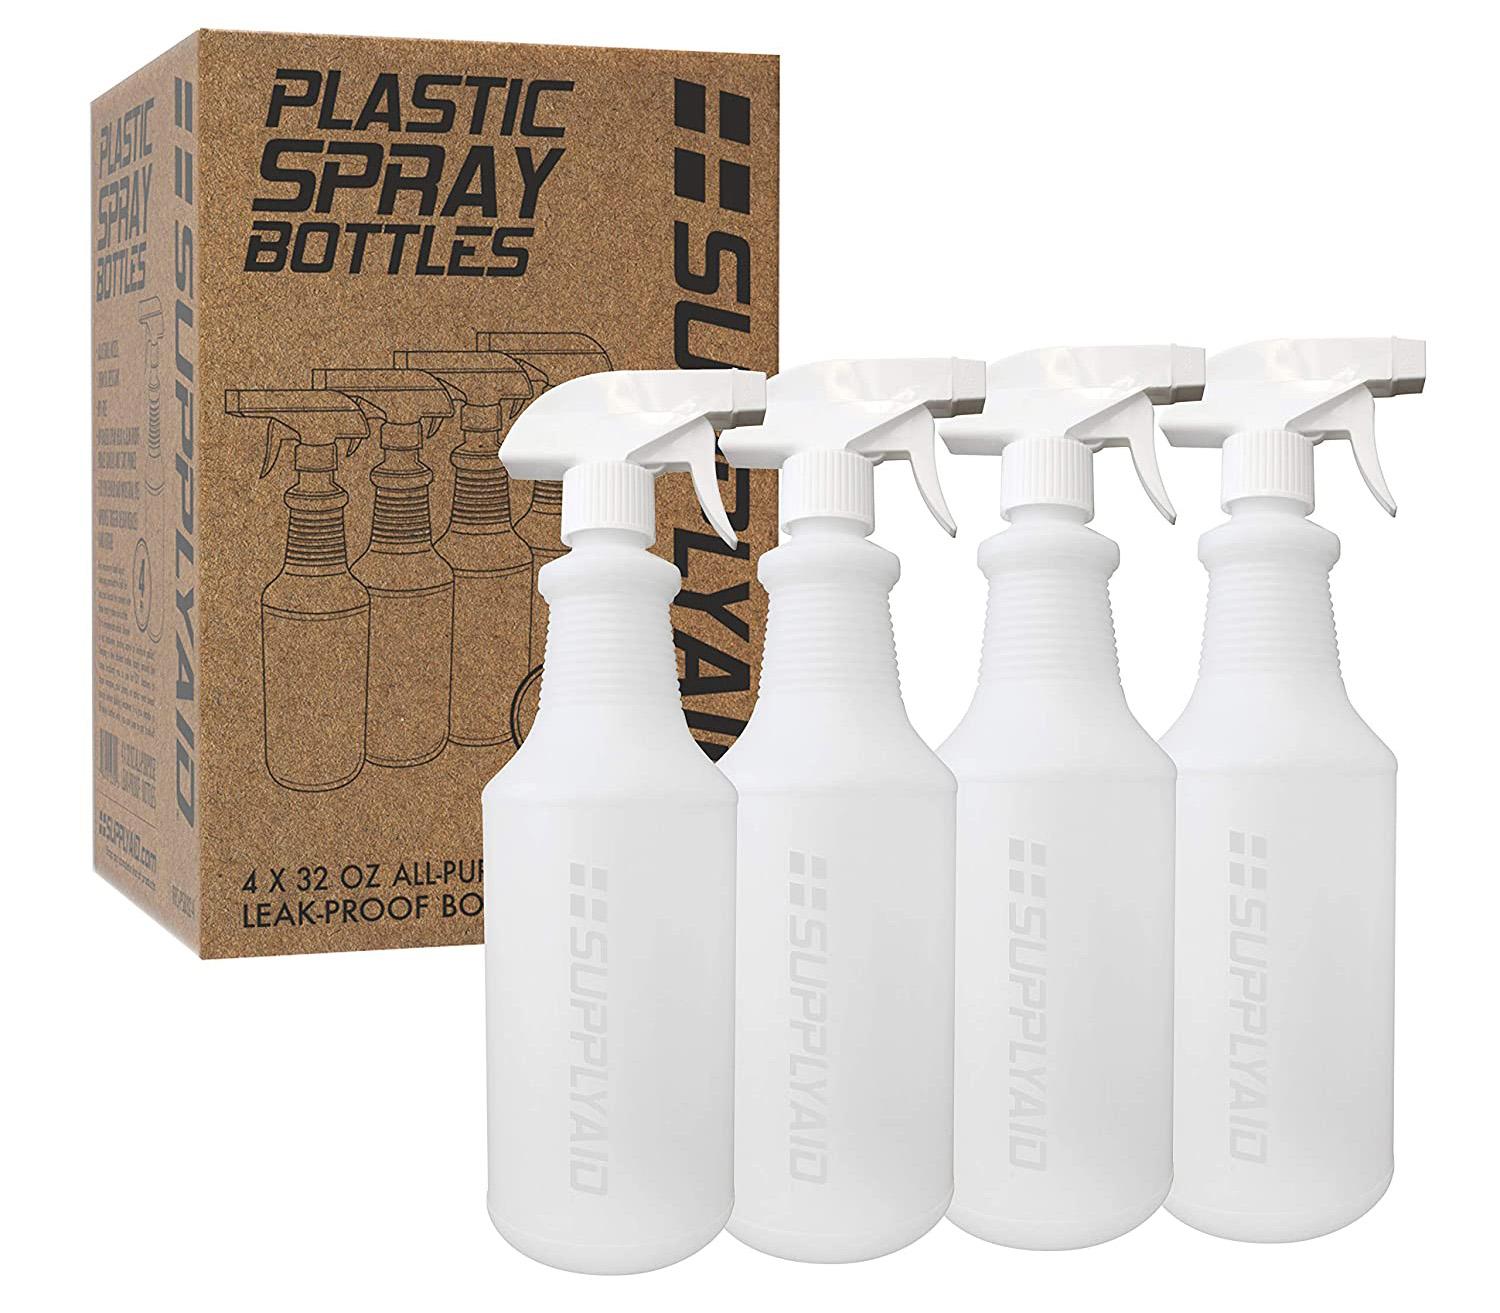 4 SupplyAID Plastic Adjustable Spray Bottles for $6.92 Shipped